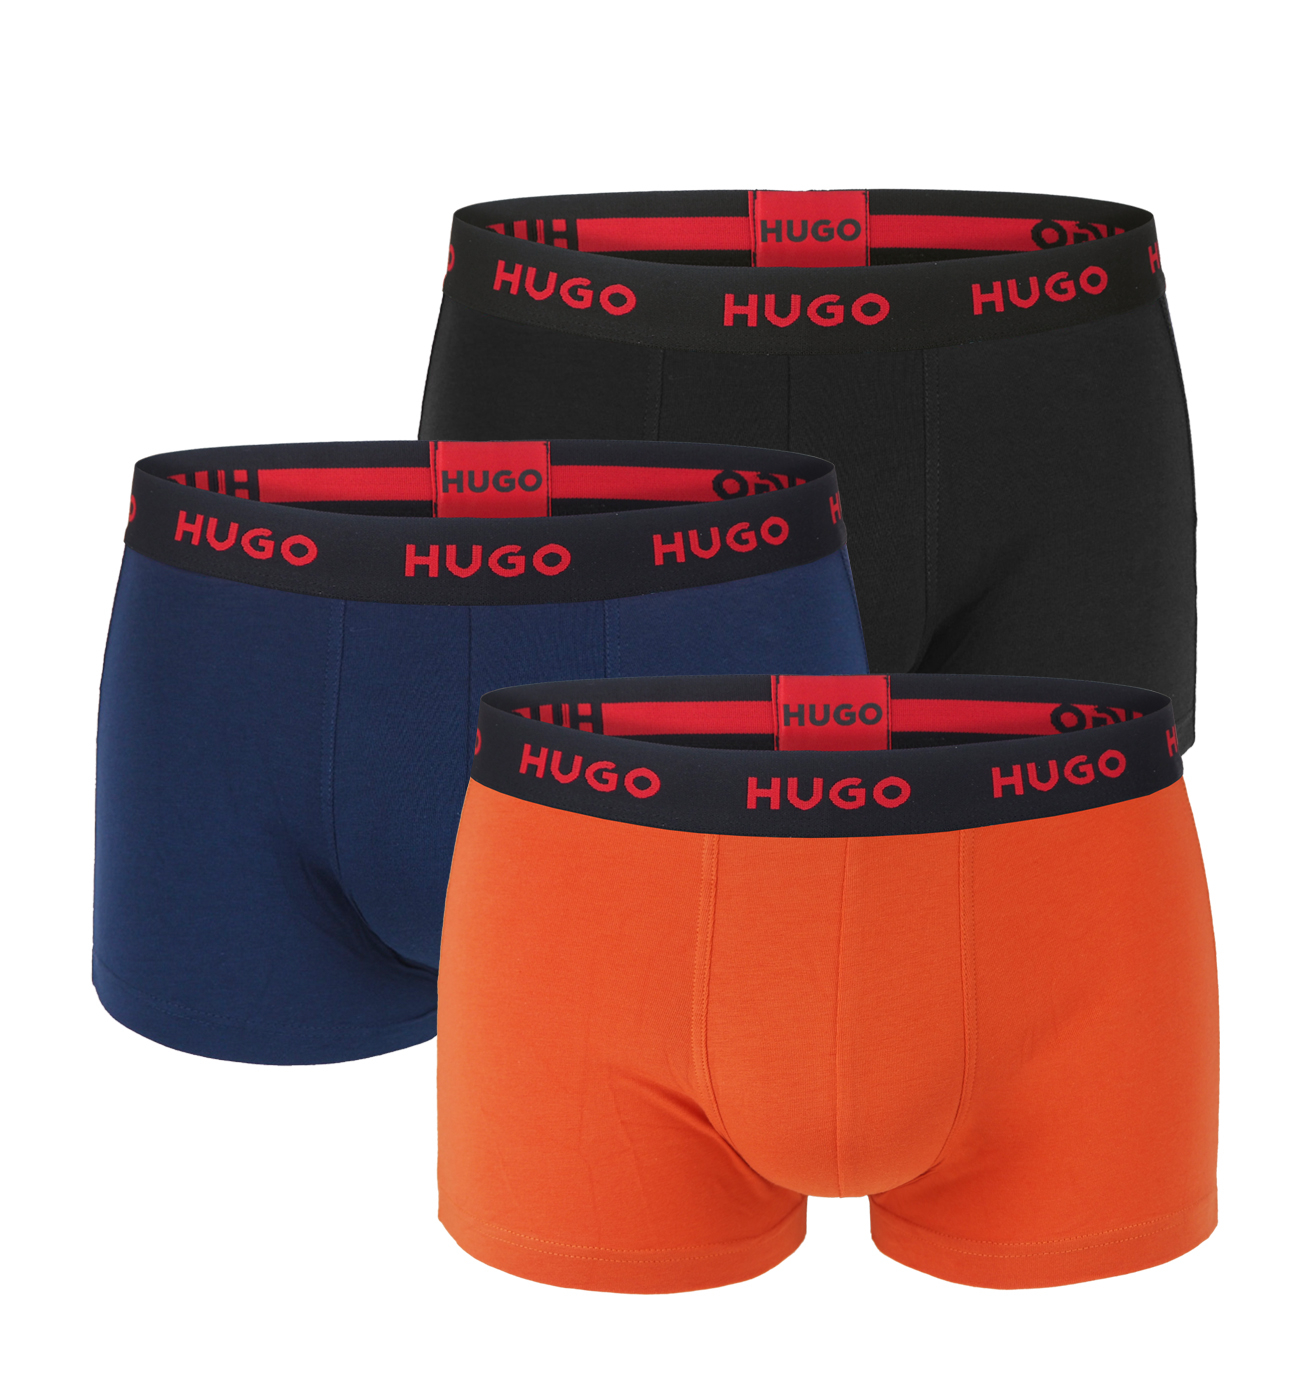 HUGO - boxerky 3PACK cotton stretch black, blue, orange combo - limitovaná fashion edícia (HUGO BOSS)-XL (99-107 cm)